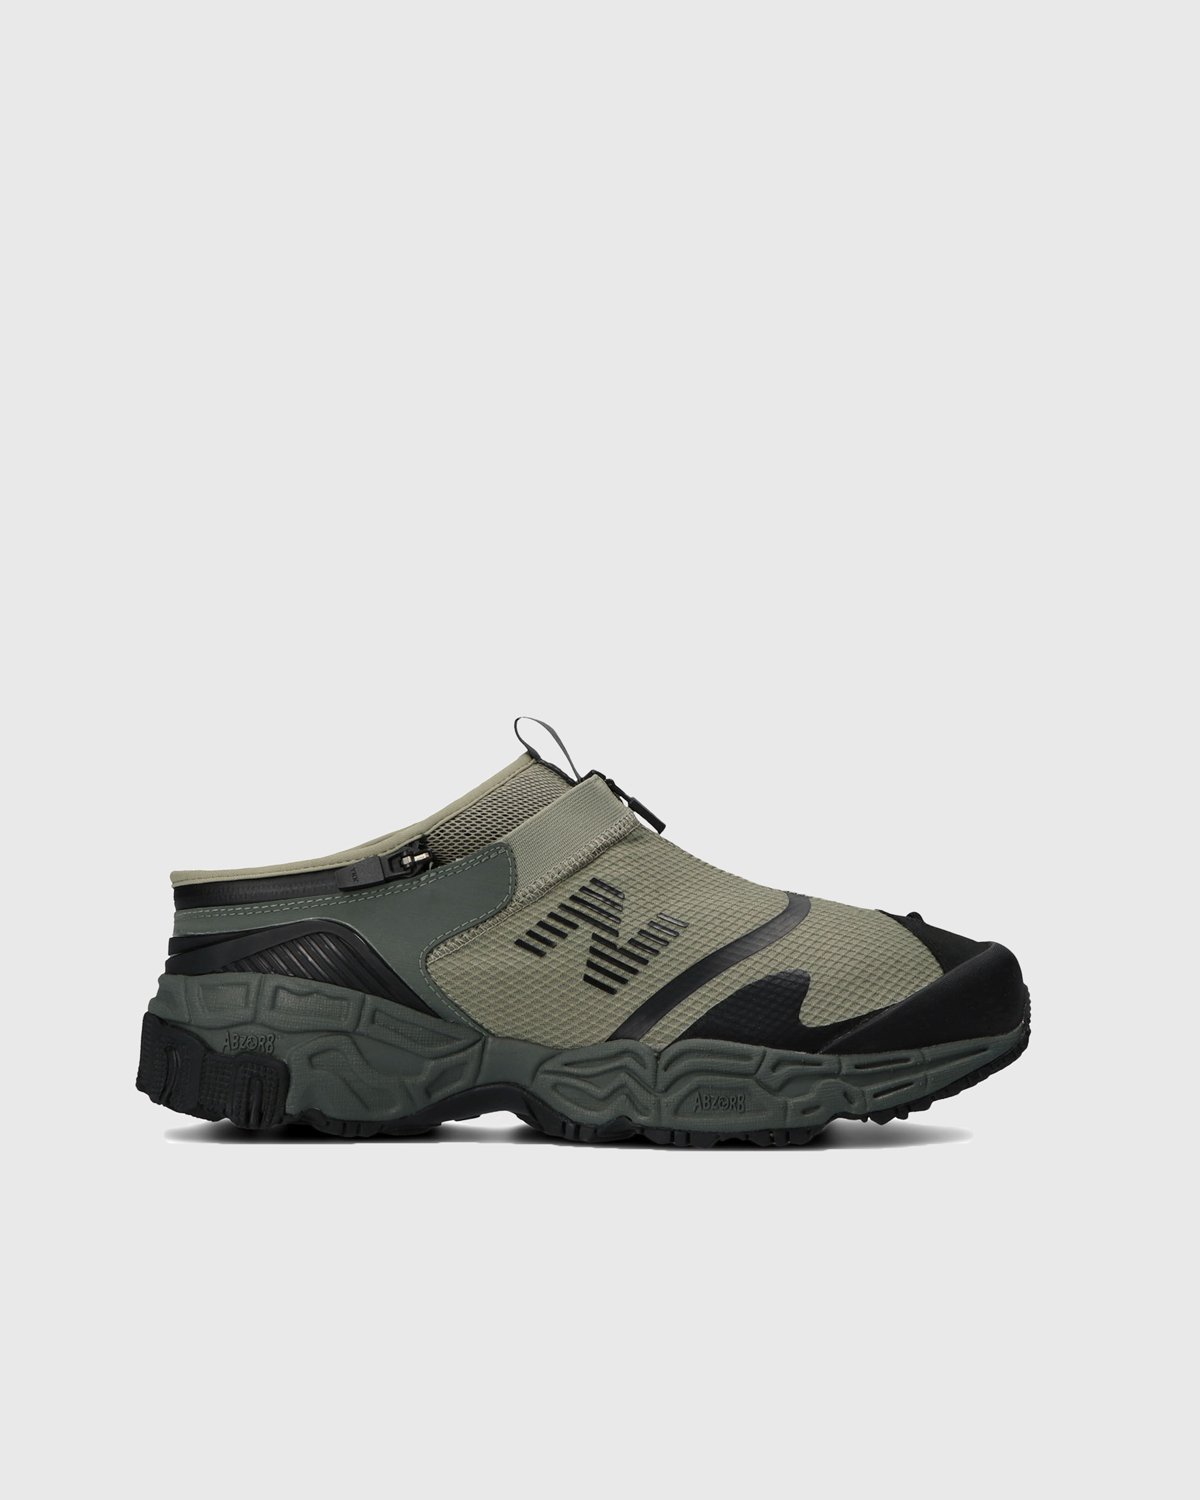 New Balance x Snow Peak - Niobium Beige/Black/Green - Footwear - Green - Image 3